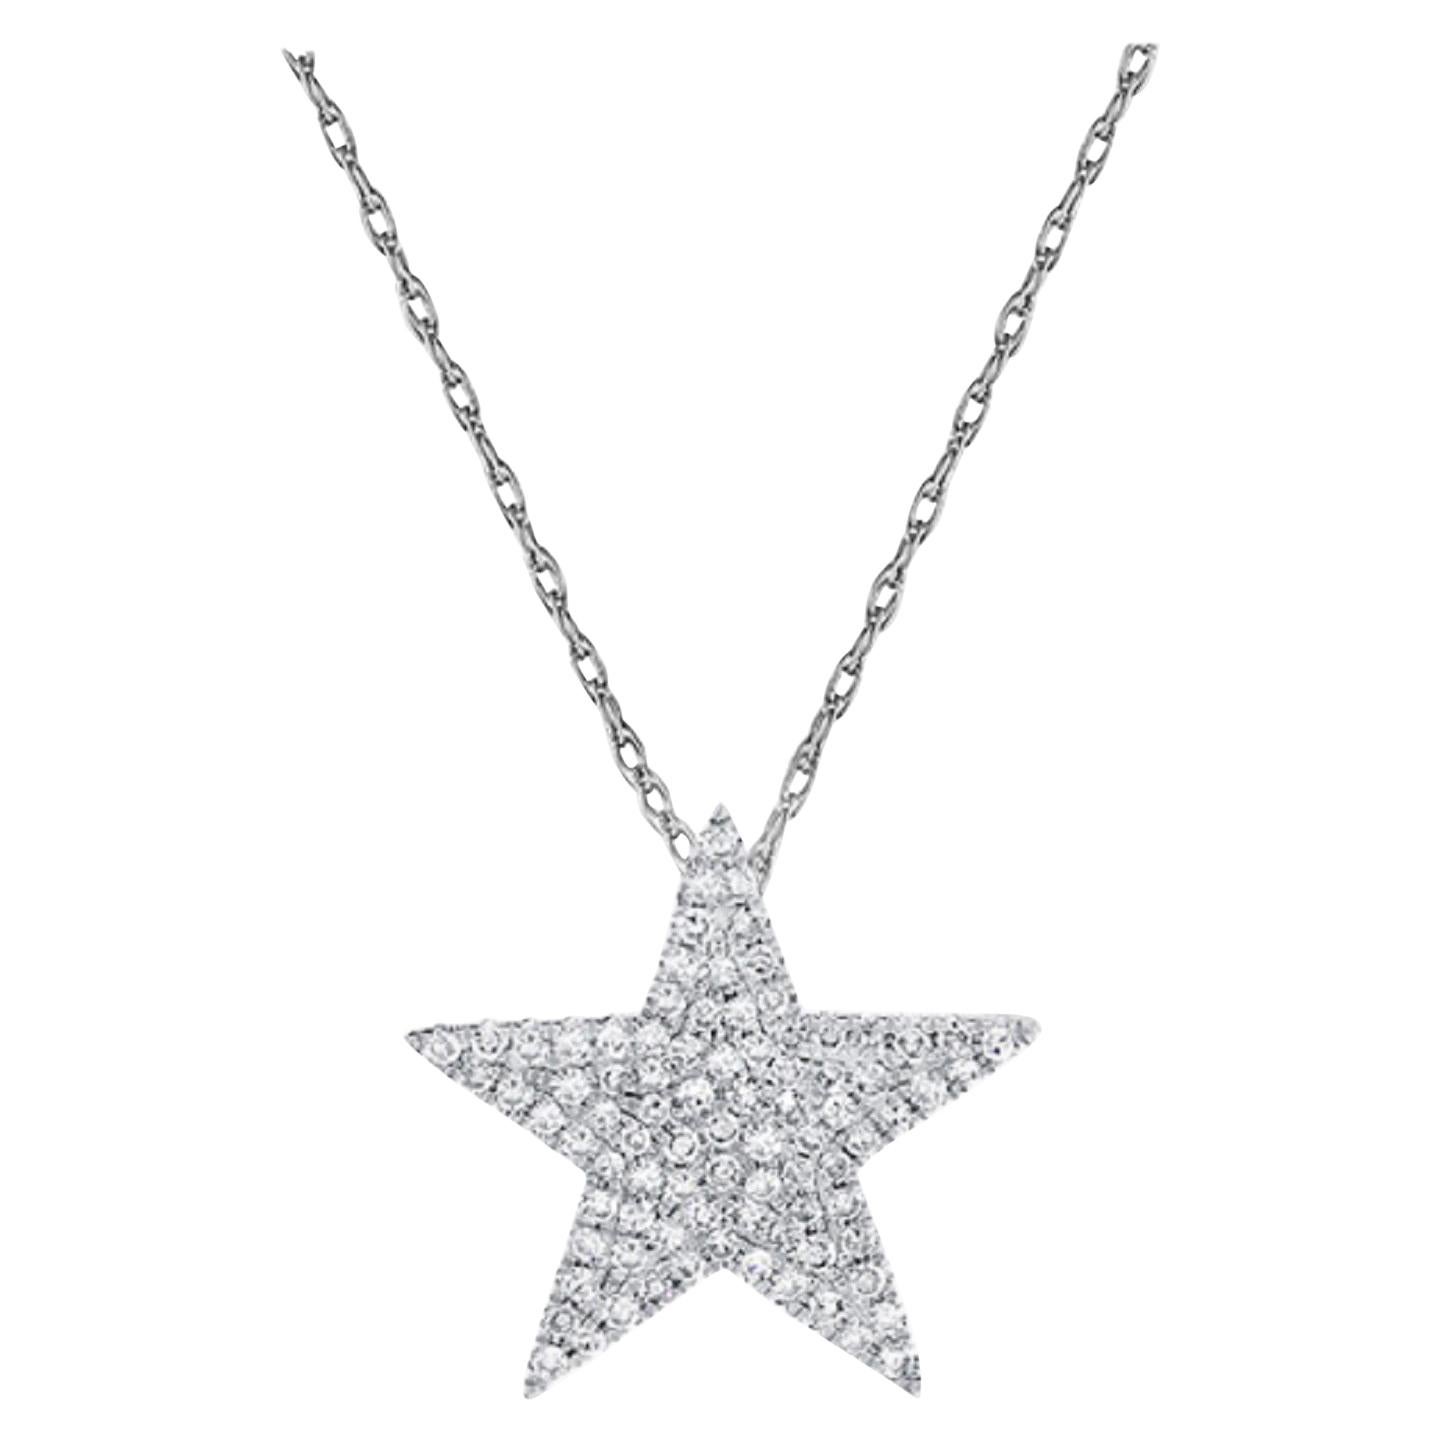 14k White Gold 0.32 Carat Diamond Star Necklace